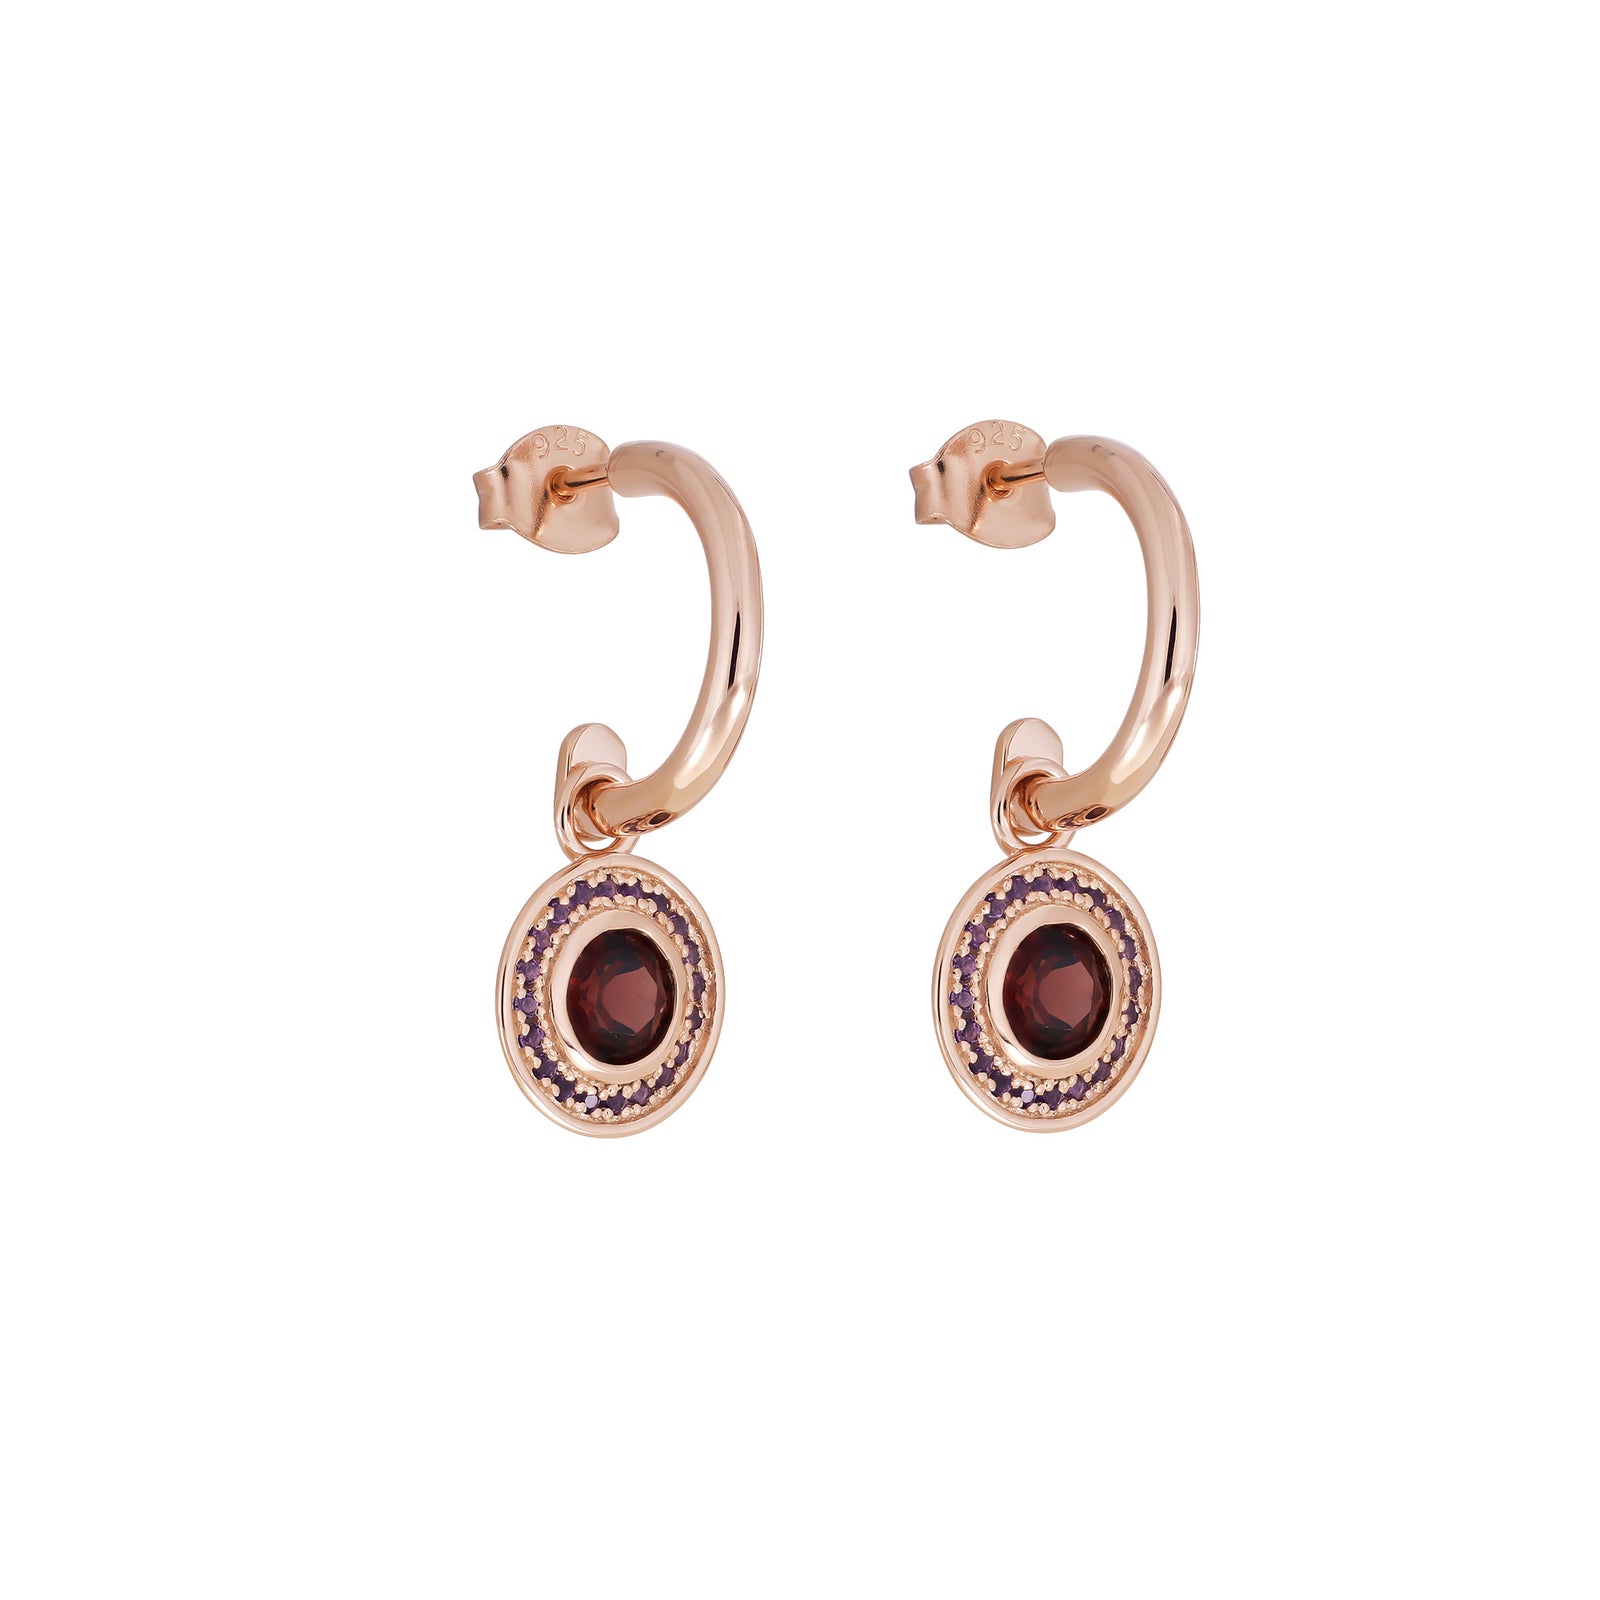 Garnet & Amethyst Drop Earrings in Rose Gold Vermeil